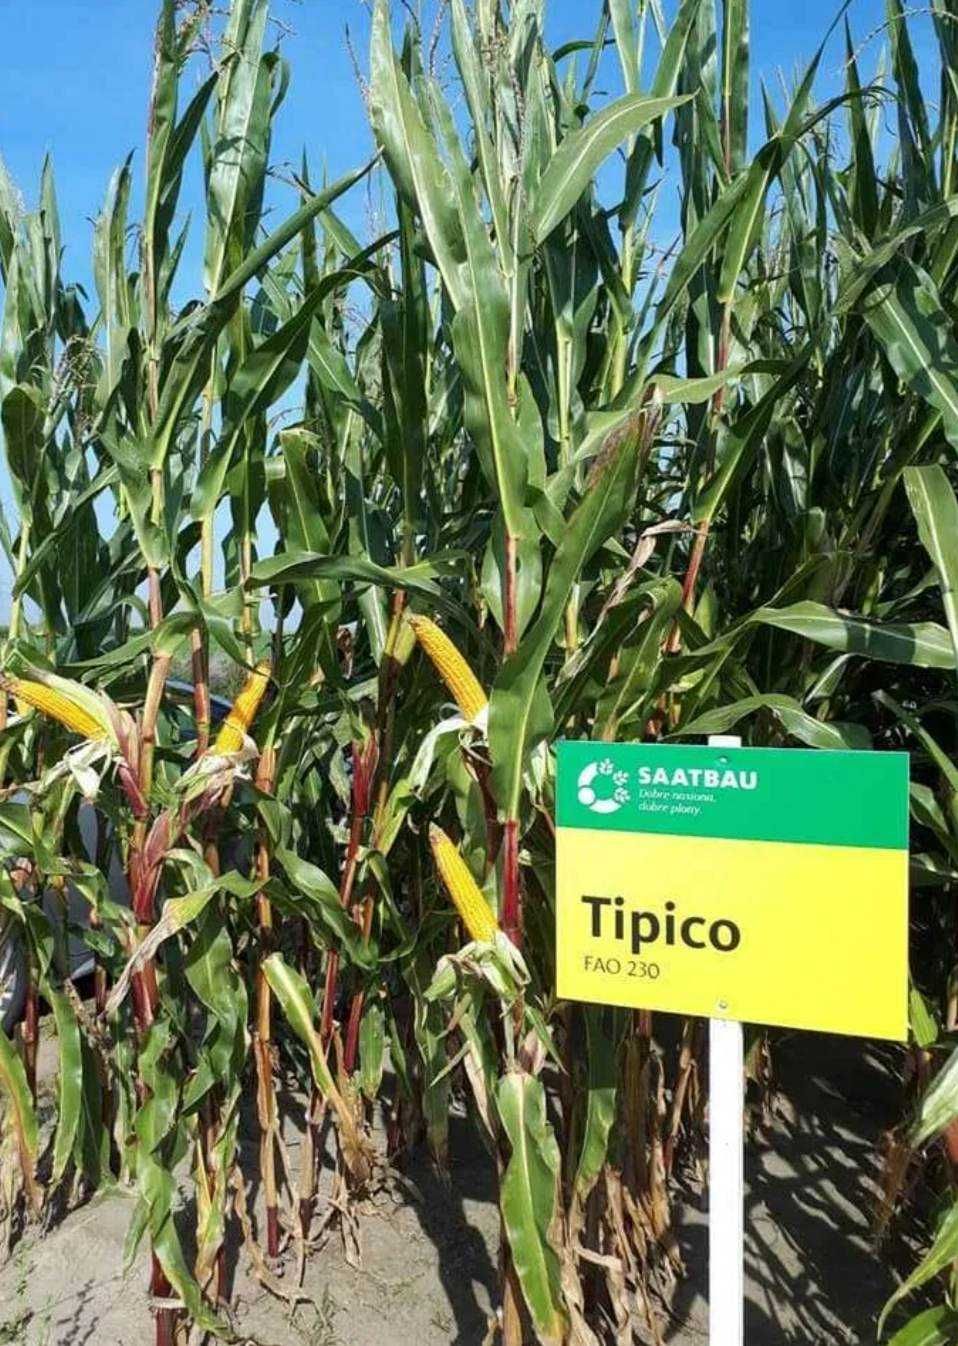 kukurydza nasienna Tipico 230fao240 Saatbau zbliżona do Danubio rabaty